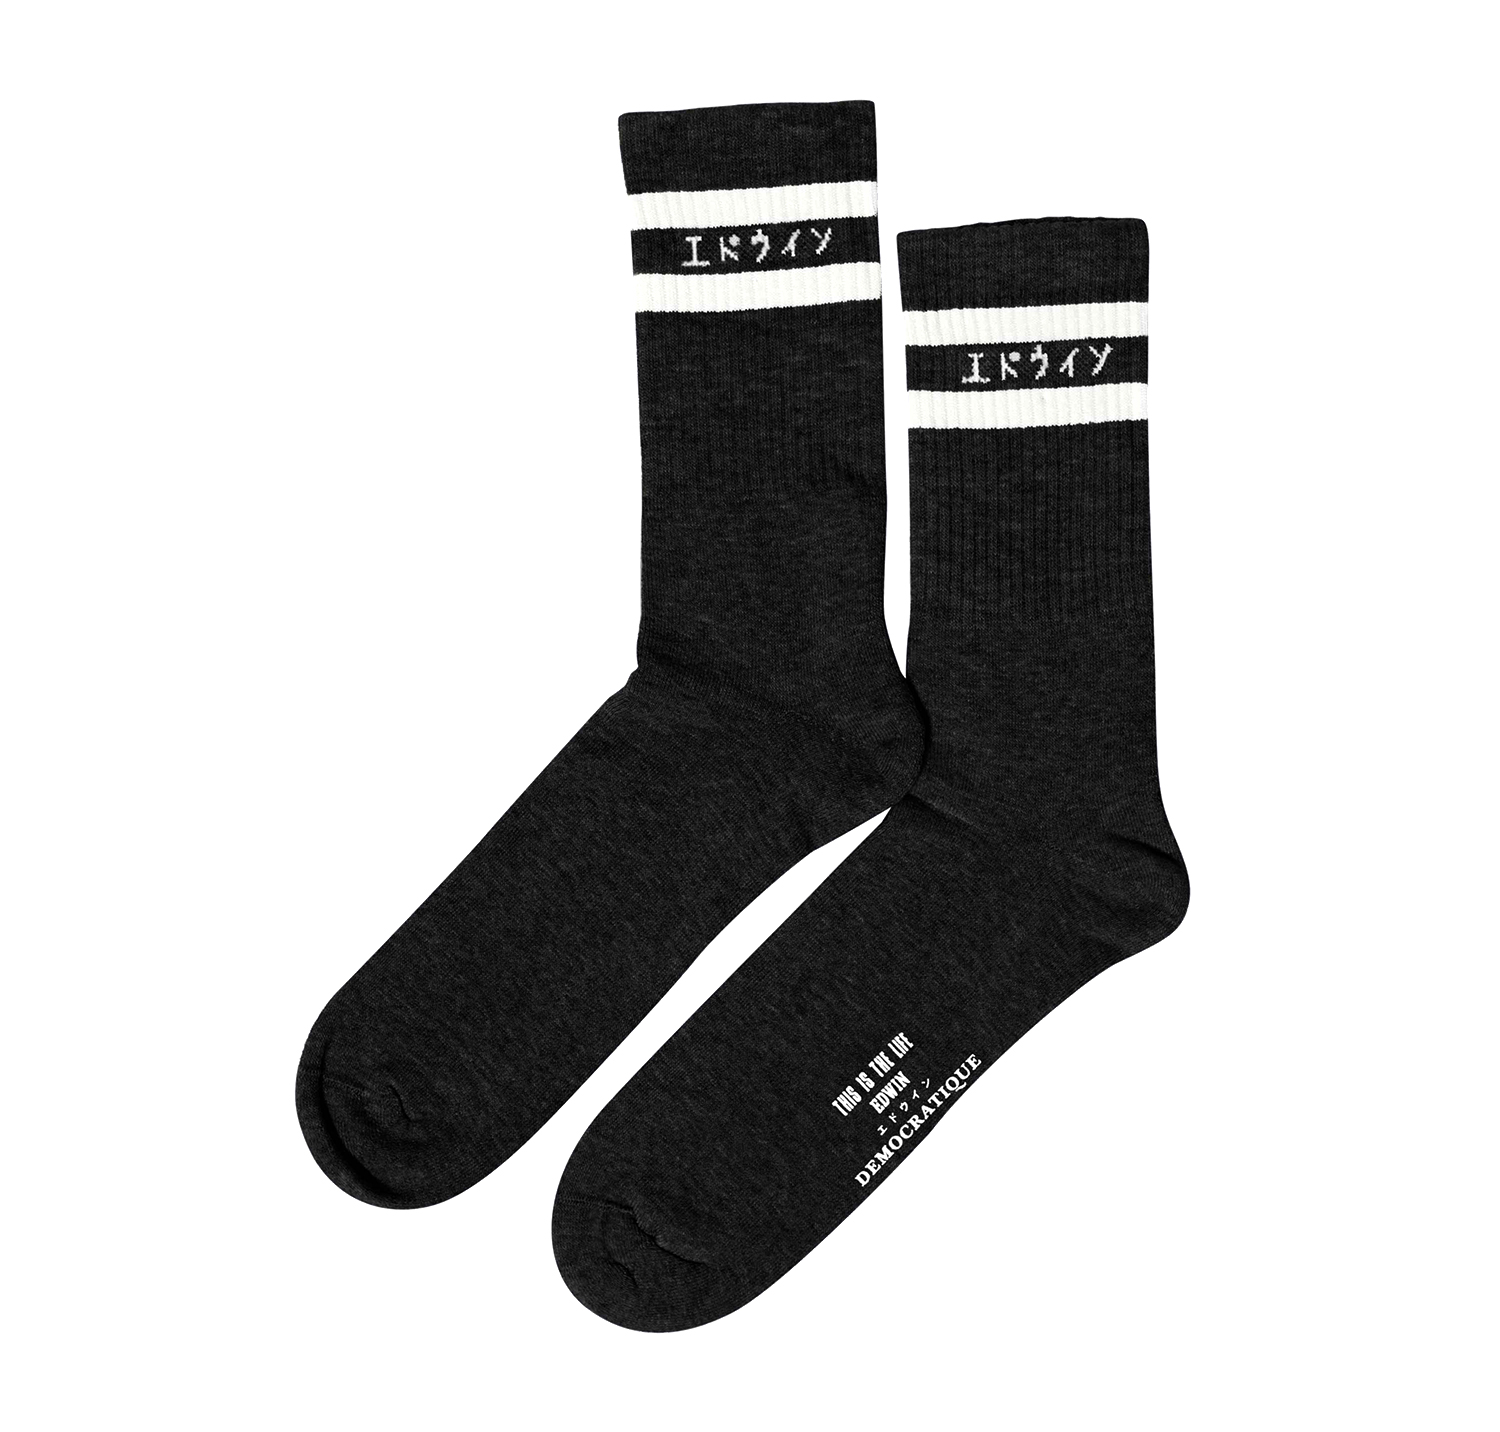 EDWIN x DEMOCRATIQUE Crew Sock - black pair